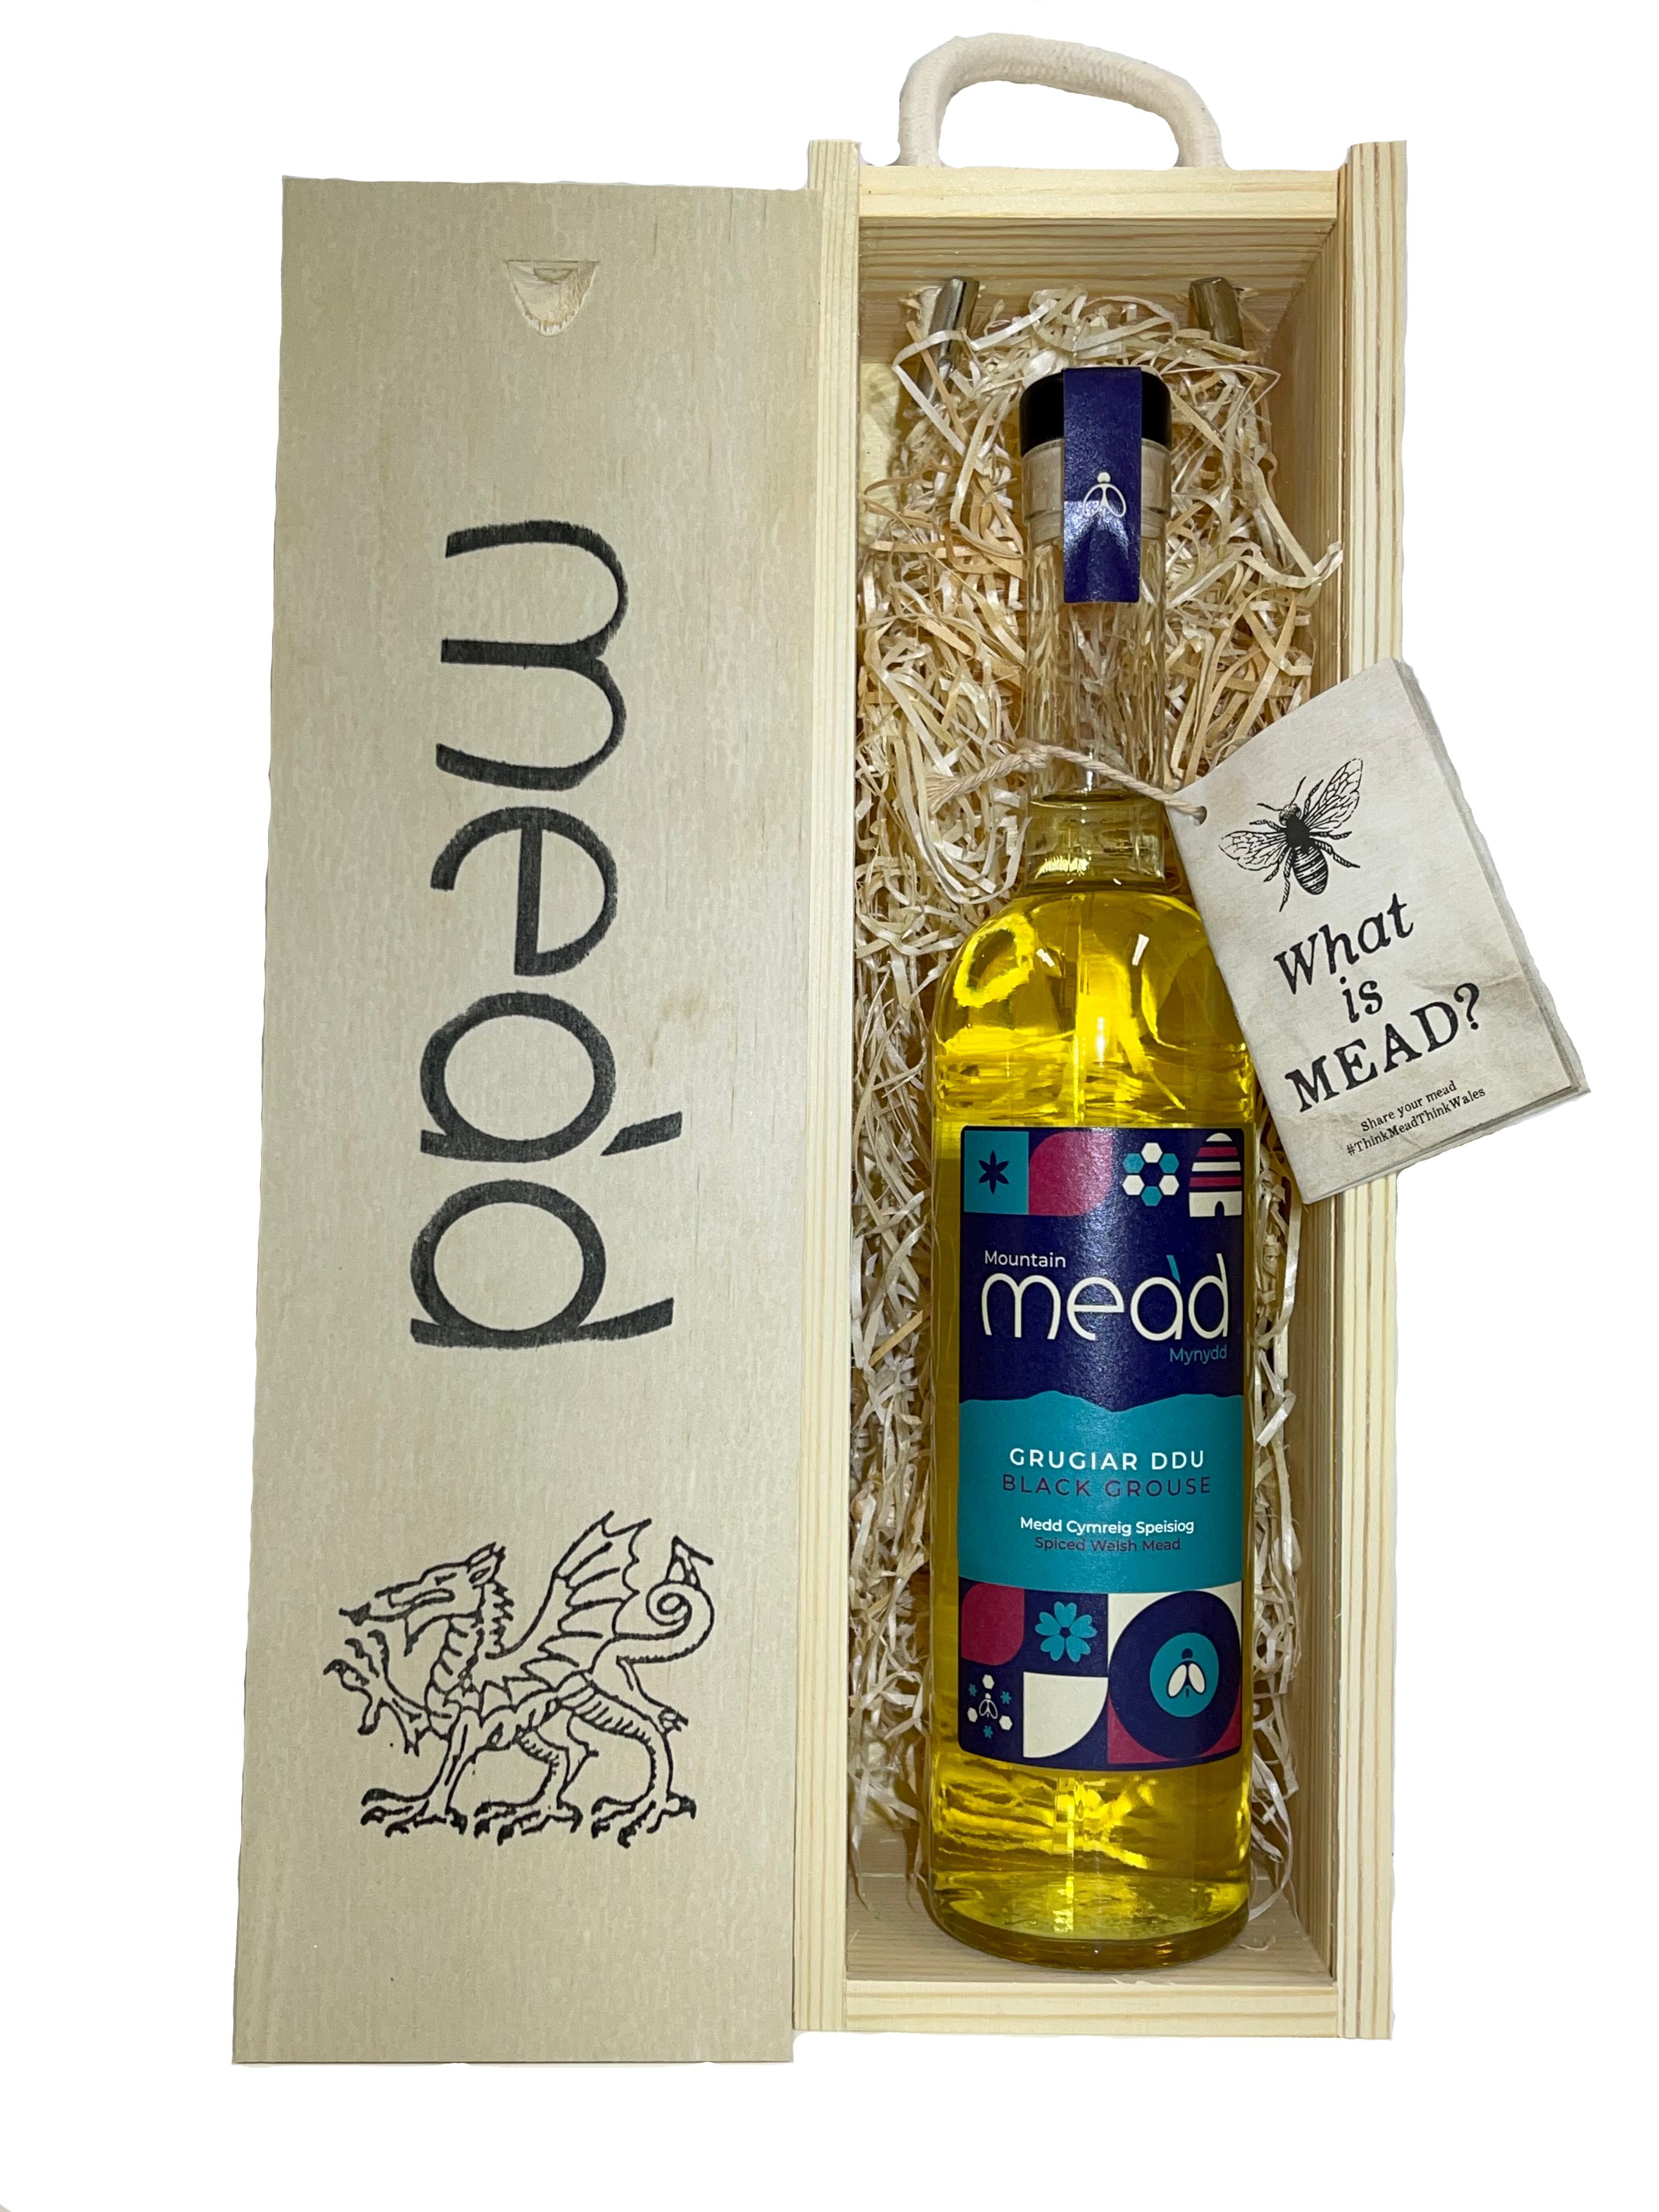 Spiced Welsh Mead in a Wooden Gift Box: Grugiar Ddu - Black Grouse 500ml